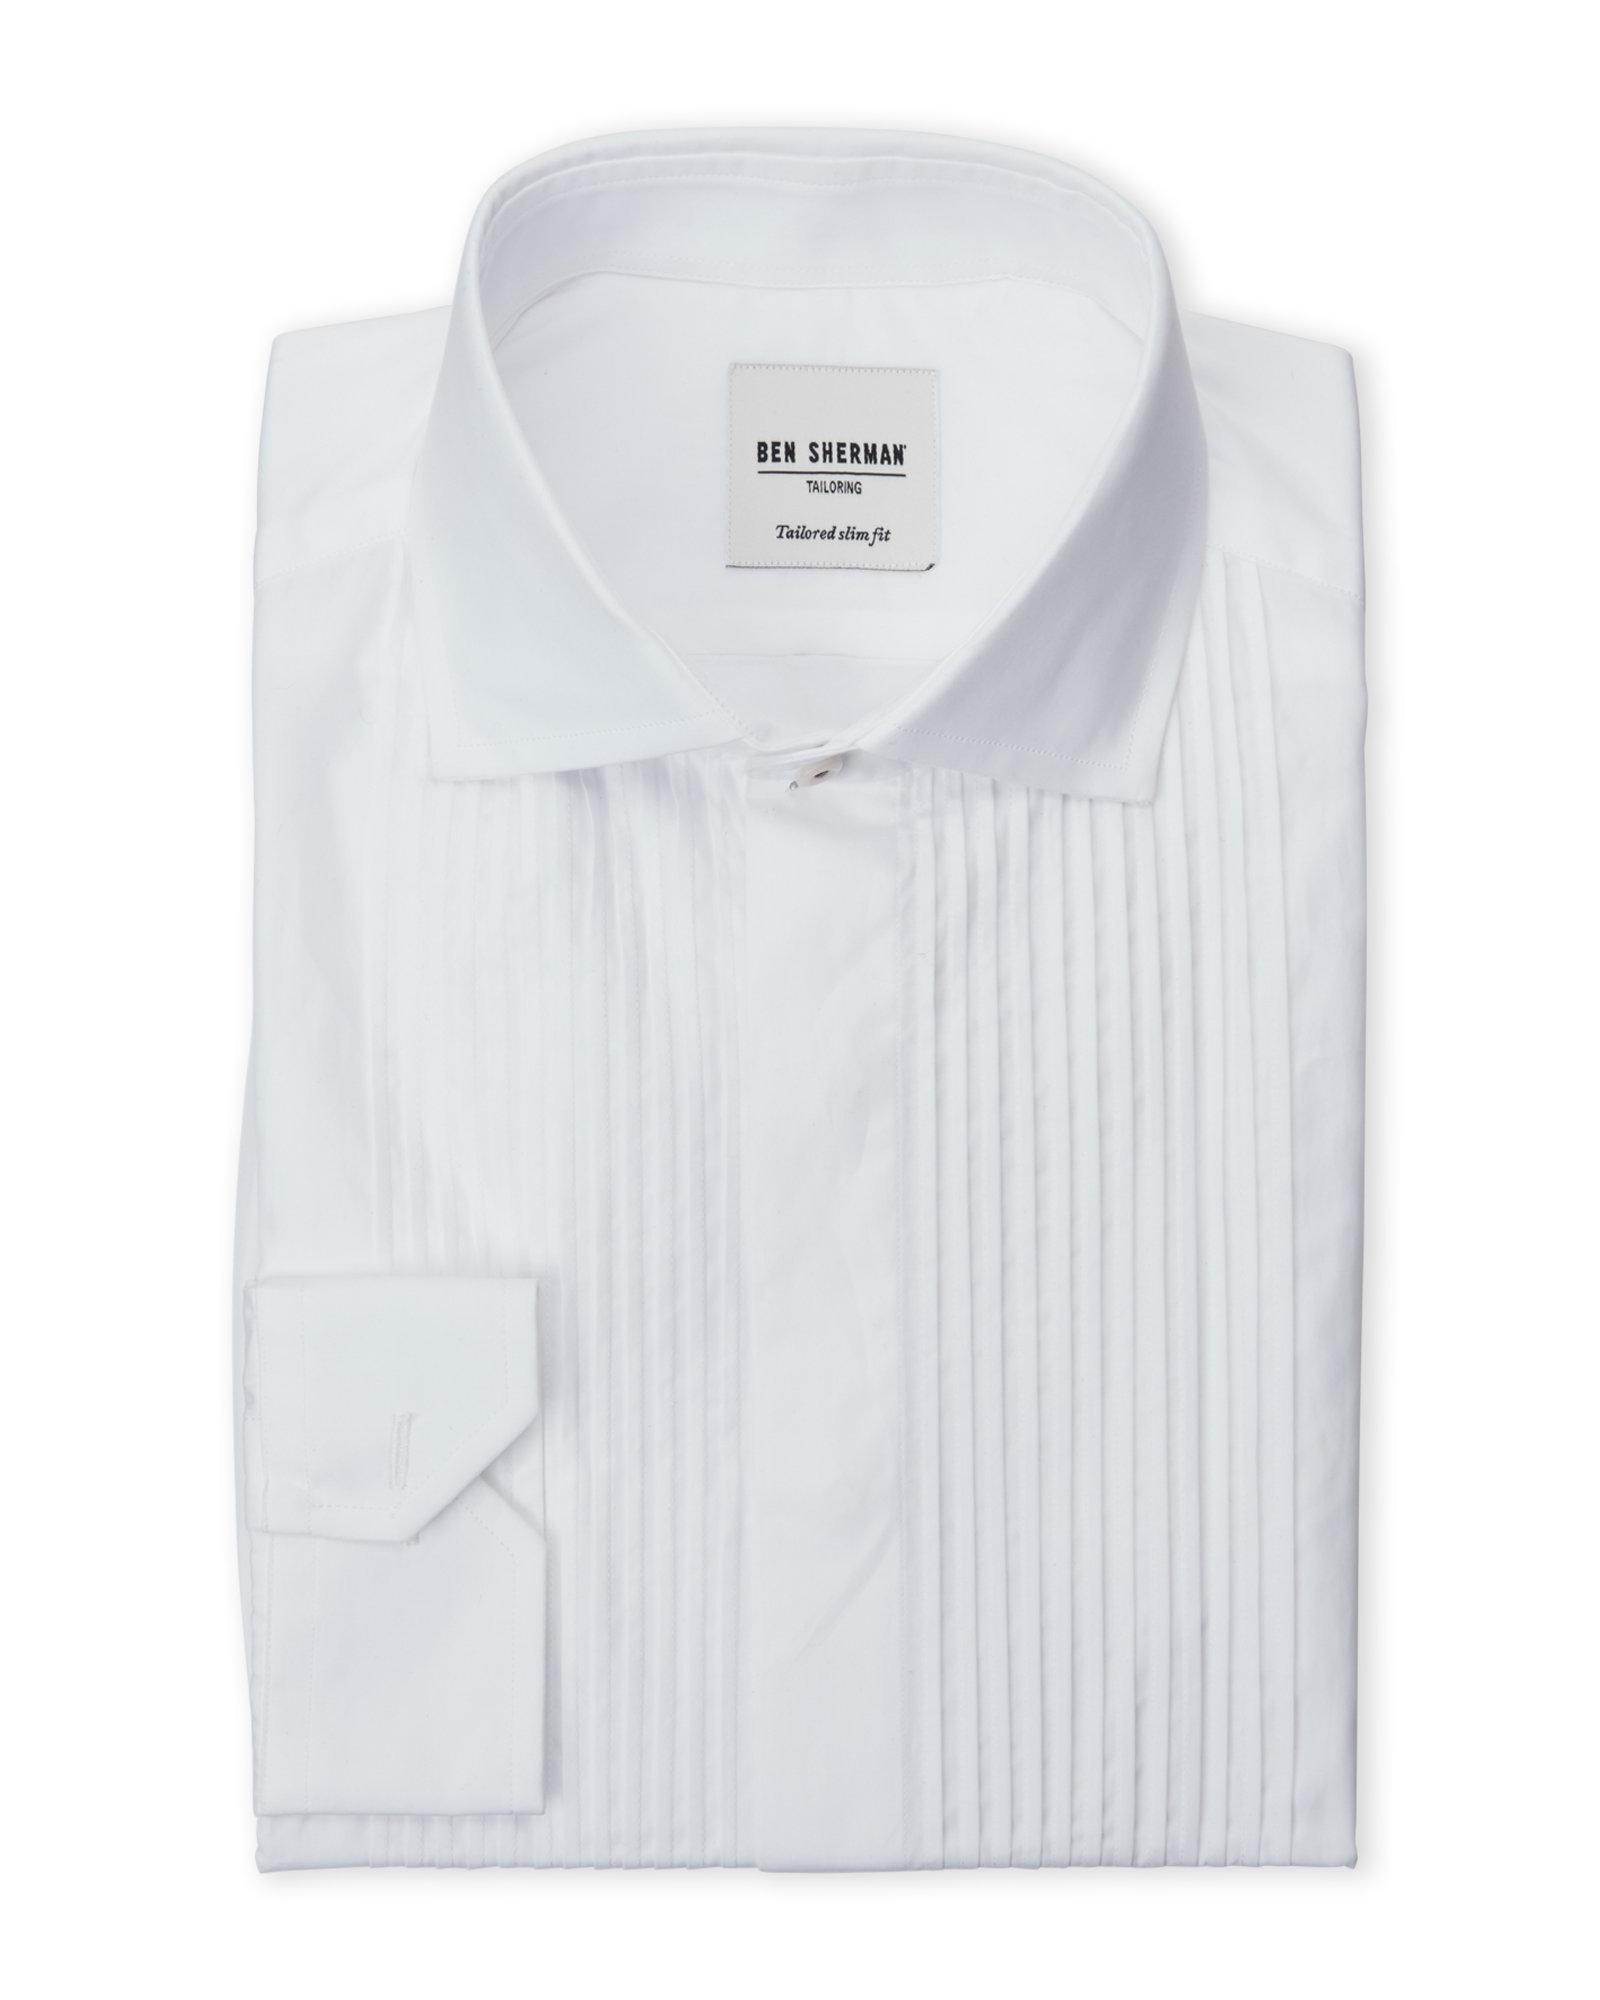 Lyst - Ben Sherman French Cuffs Tuxedo Dress Shirt in White for Men